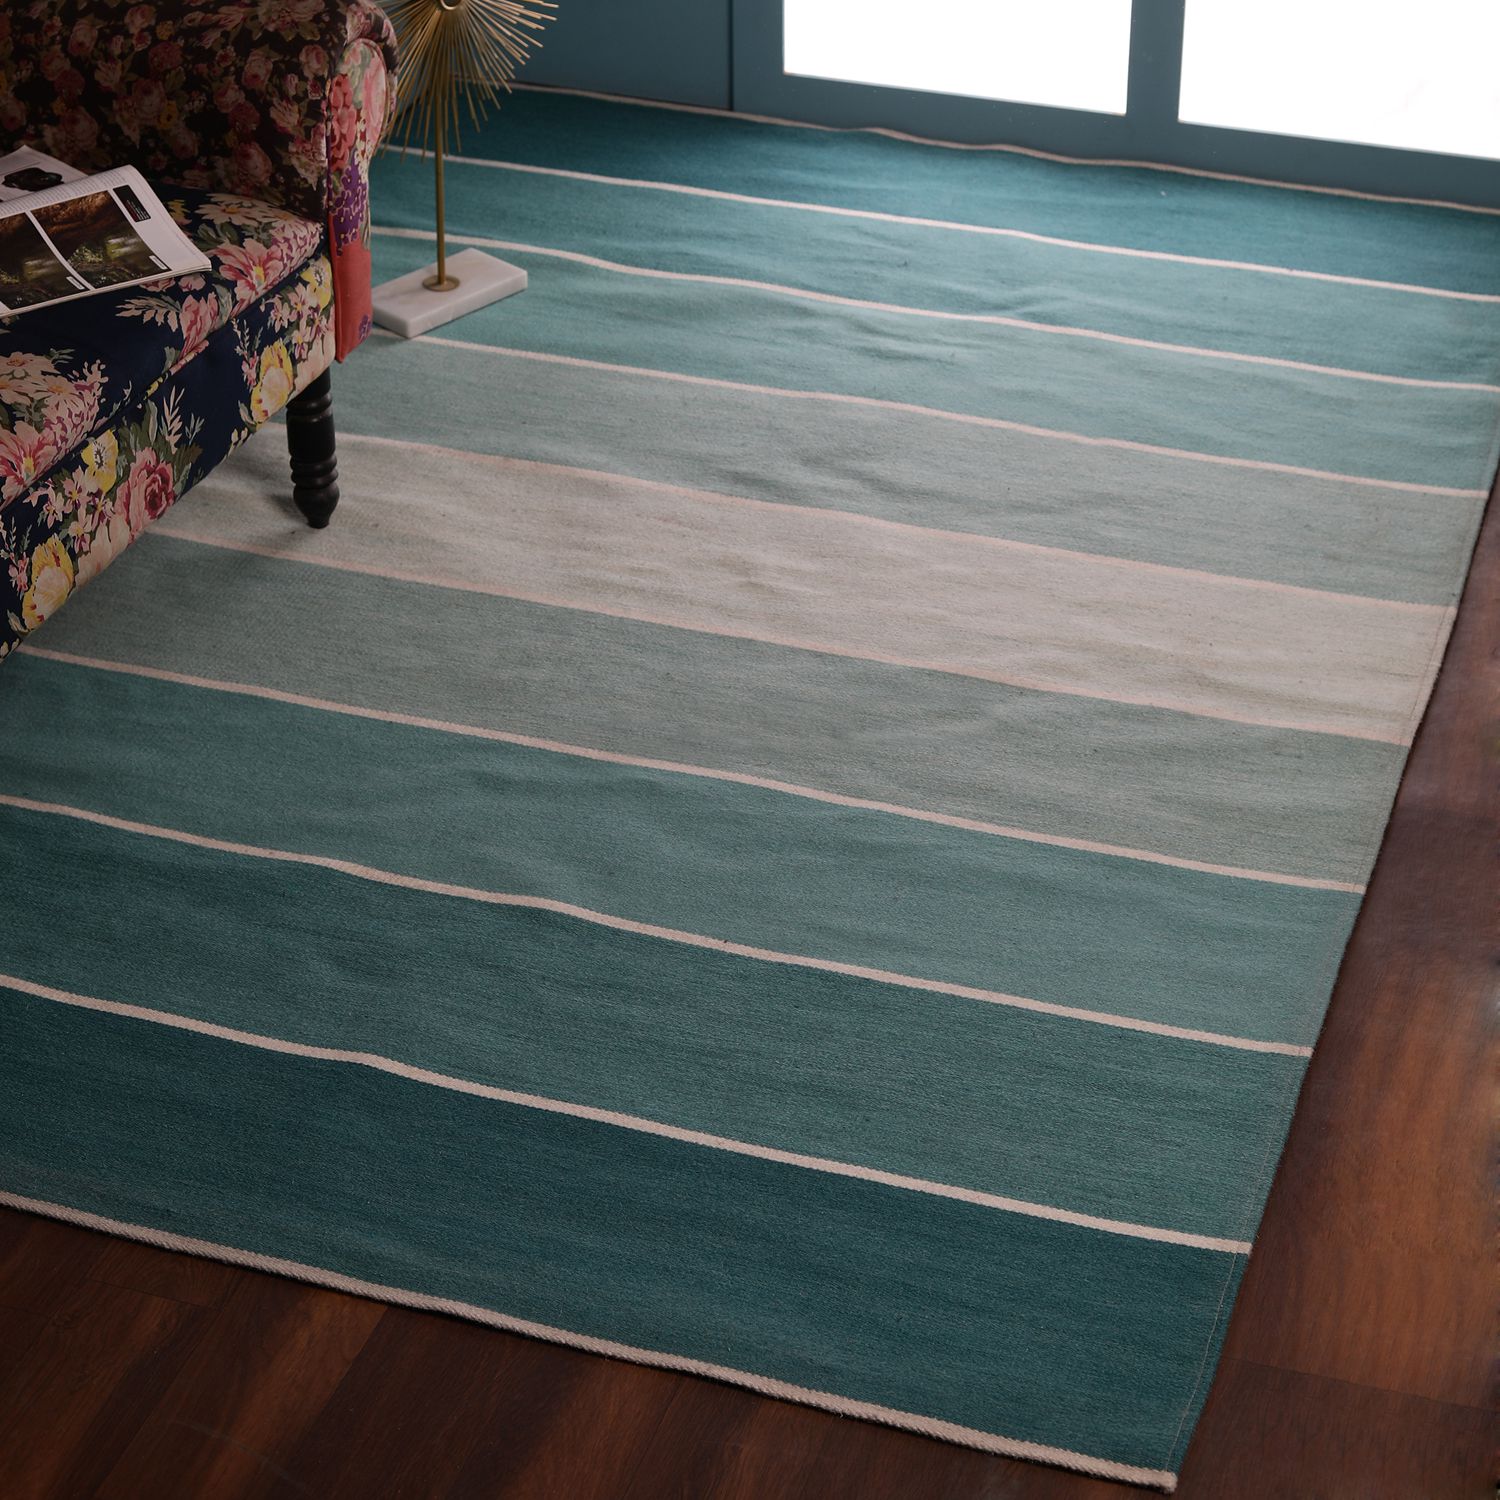     			PEQURA Green Wool Carpet Stripes 5x8 Ft